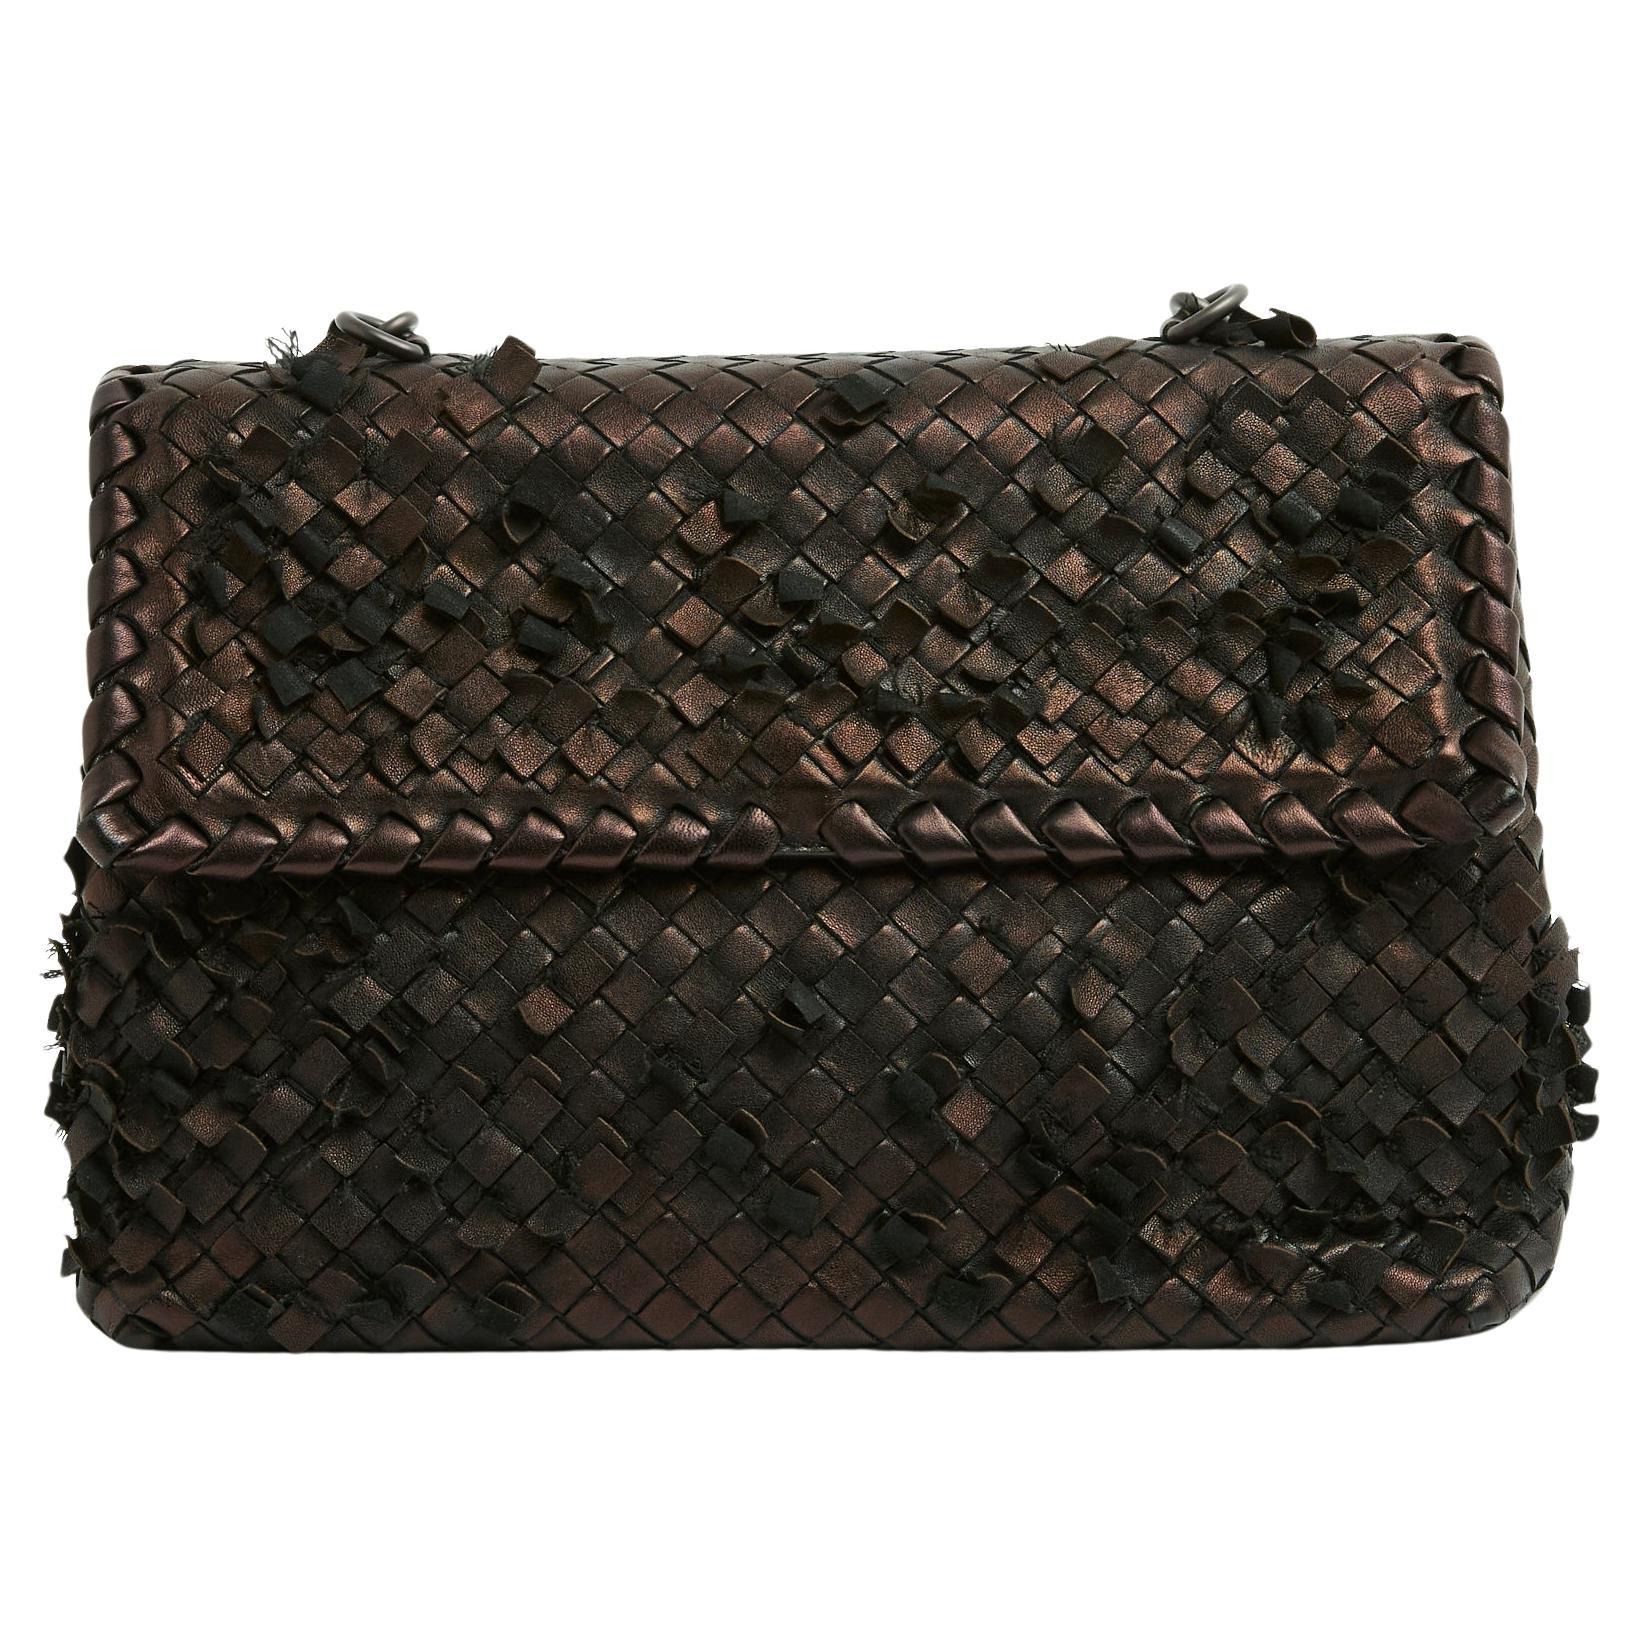 Bottega Veneta Sac Olimpia GM Intrecciato Brown bronze Leather Bag For Sale